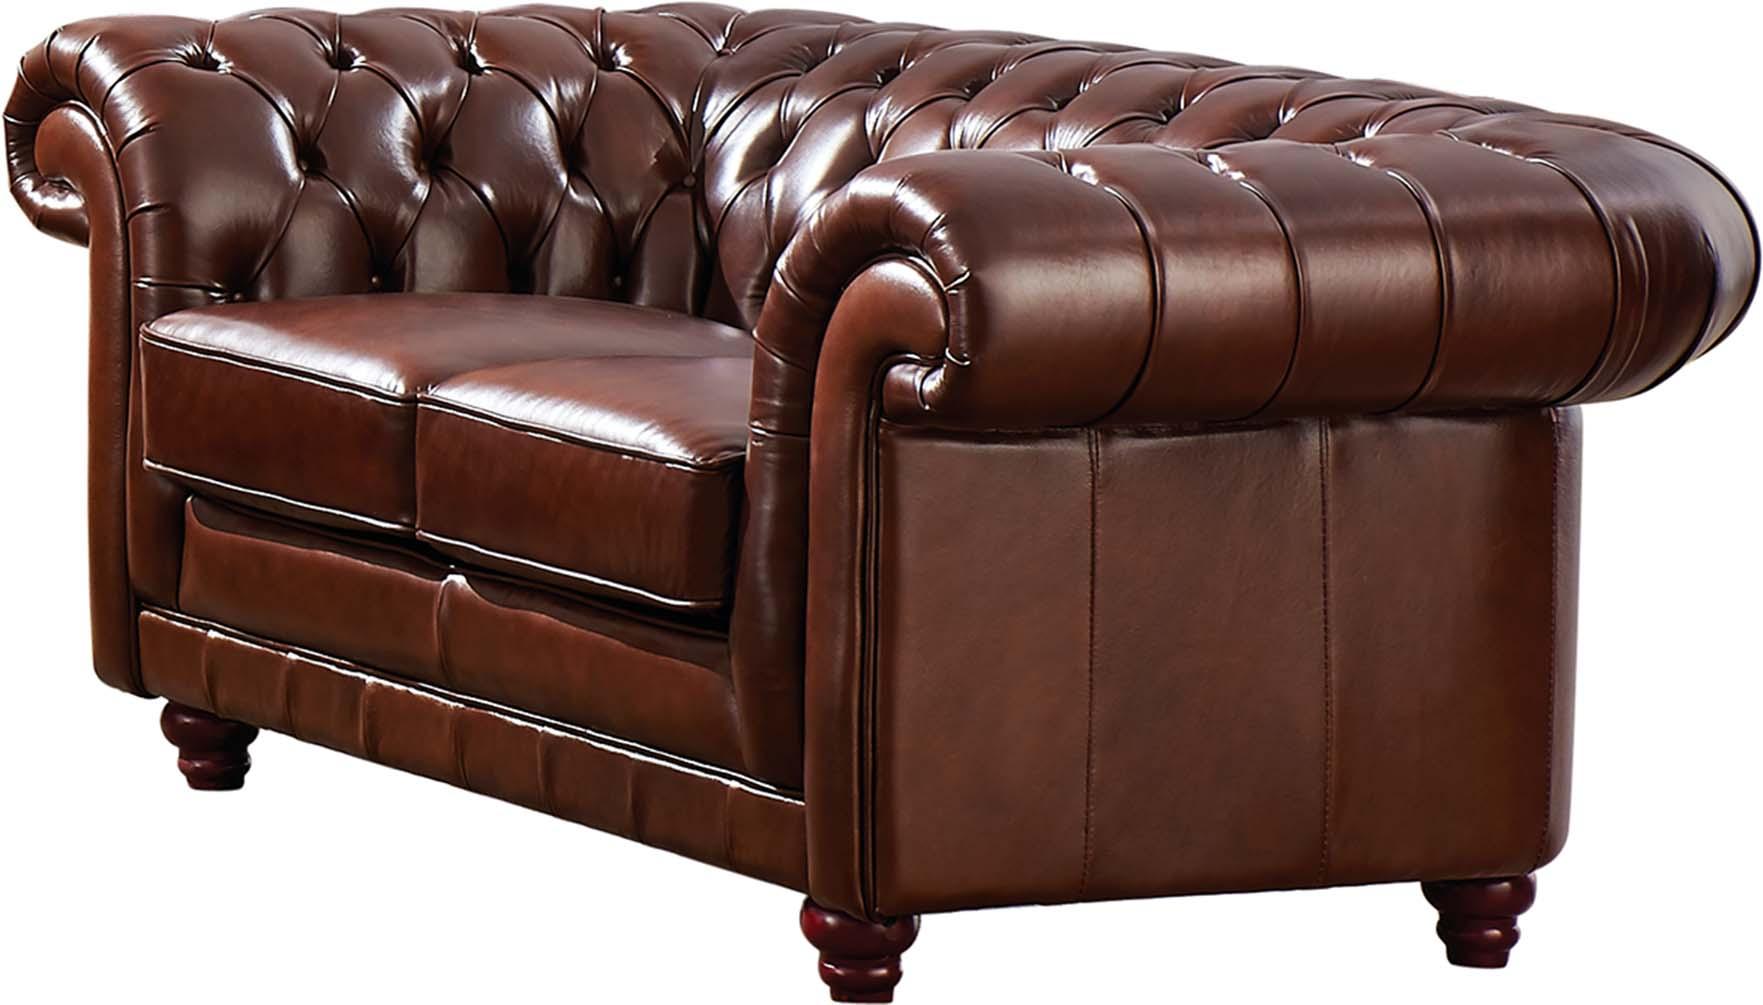 

    
ESF 288 Luxury Chocolate Italian Leather Chesterfield Sofa Set 3Pcs Contemporary
